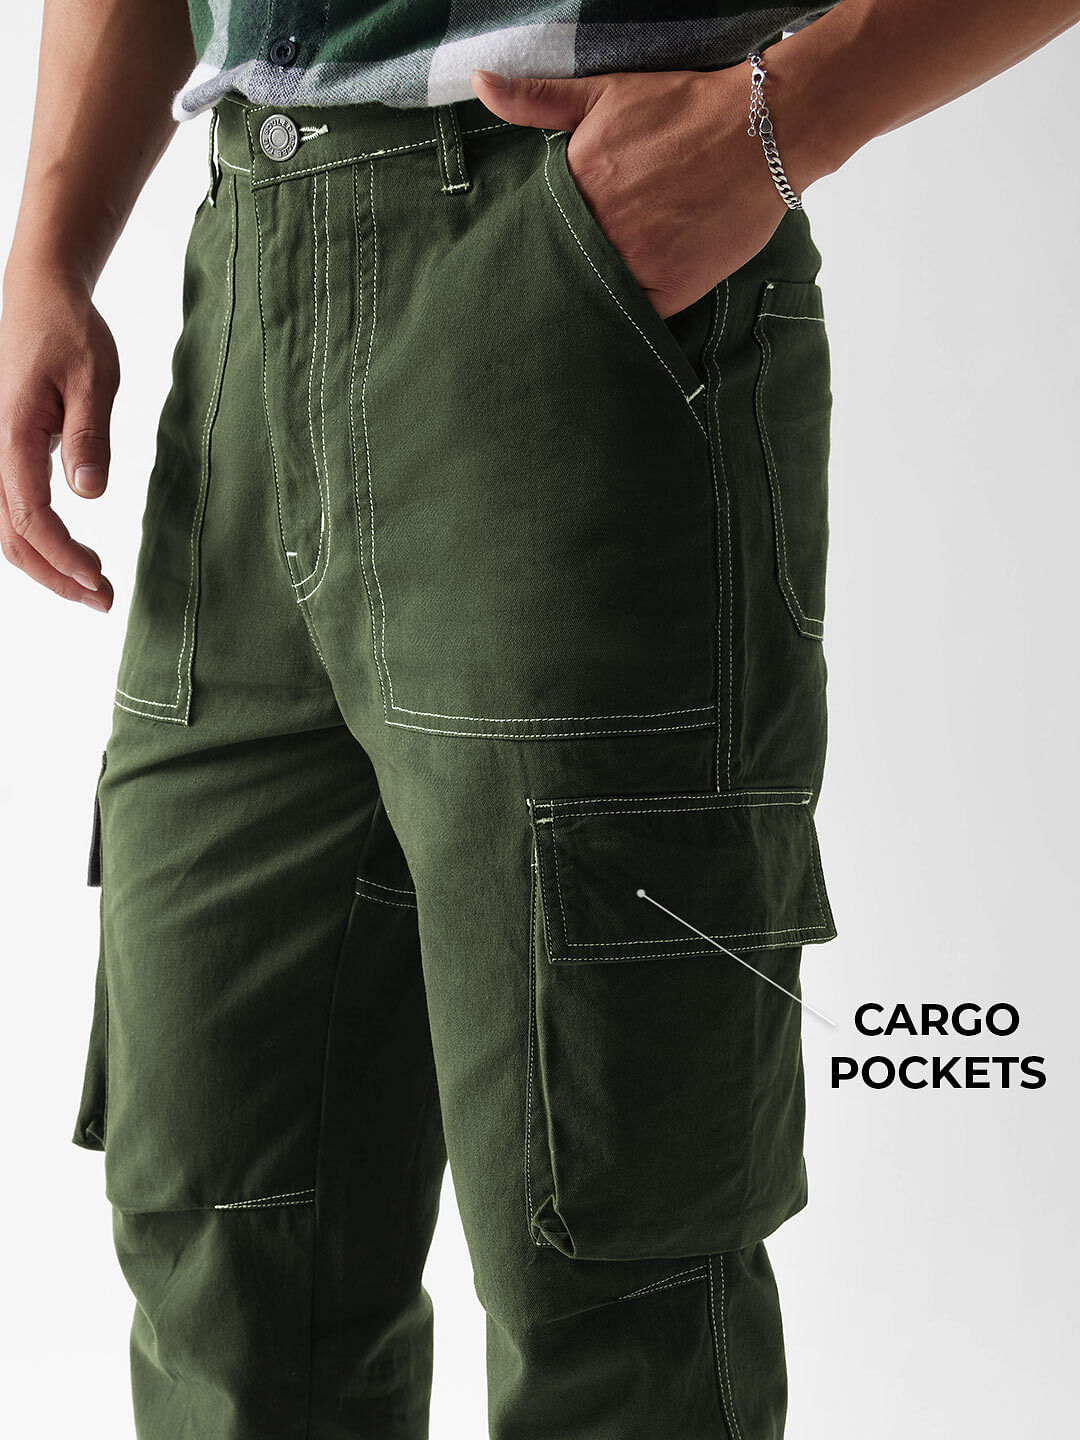 Buy Solids: Olive Mens Cargo Pants Online